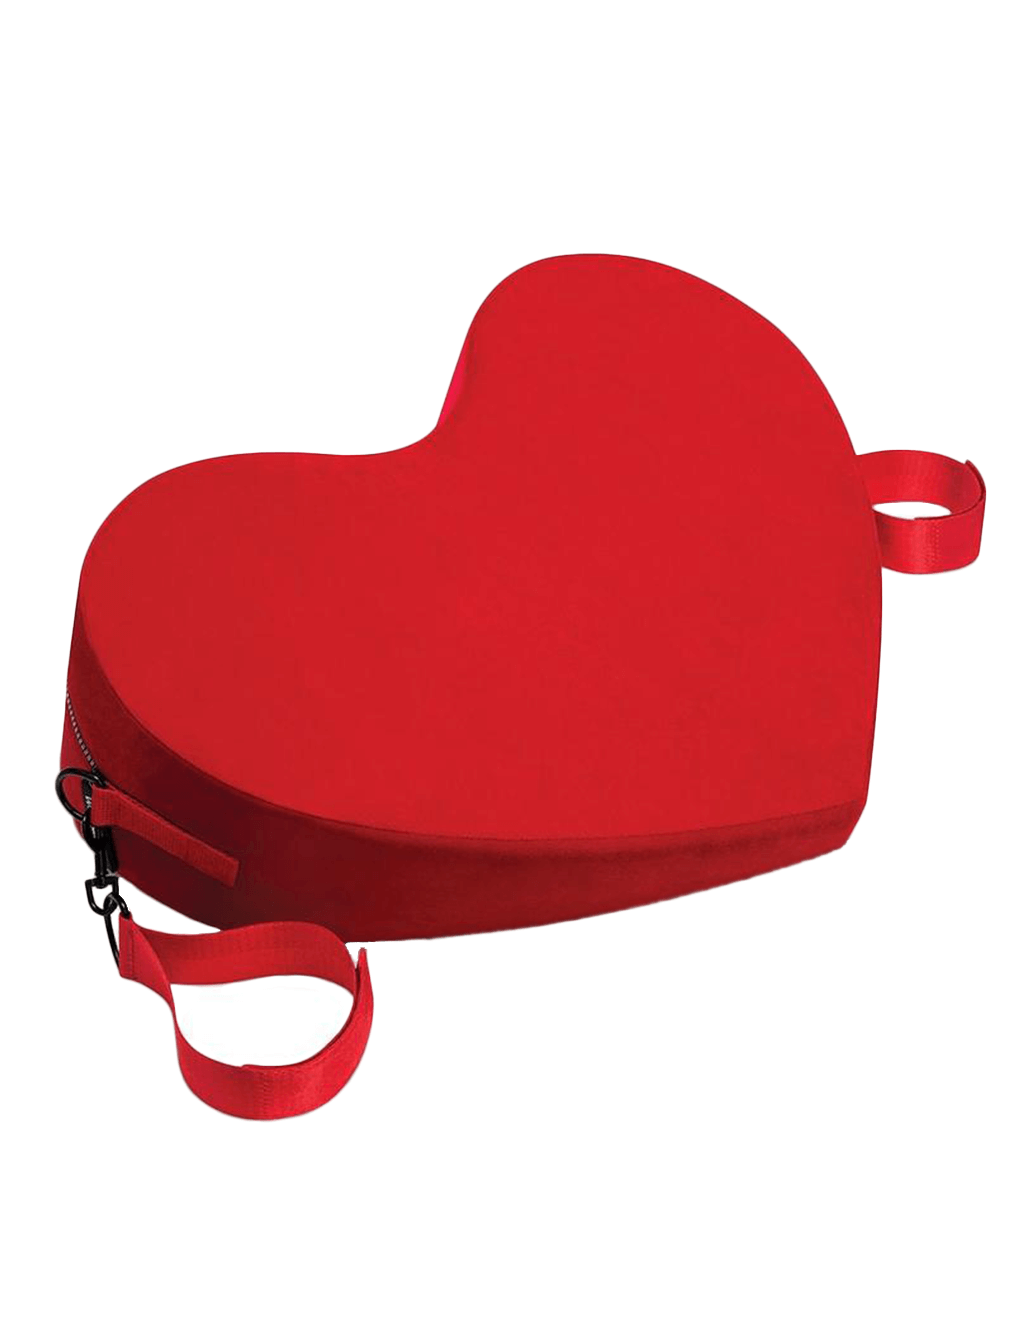 Whipsmart Love Cushion - Red - Main